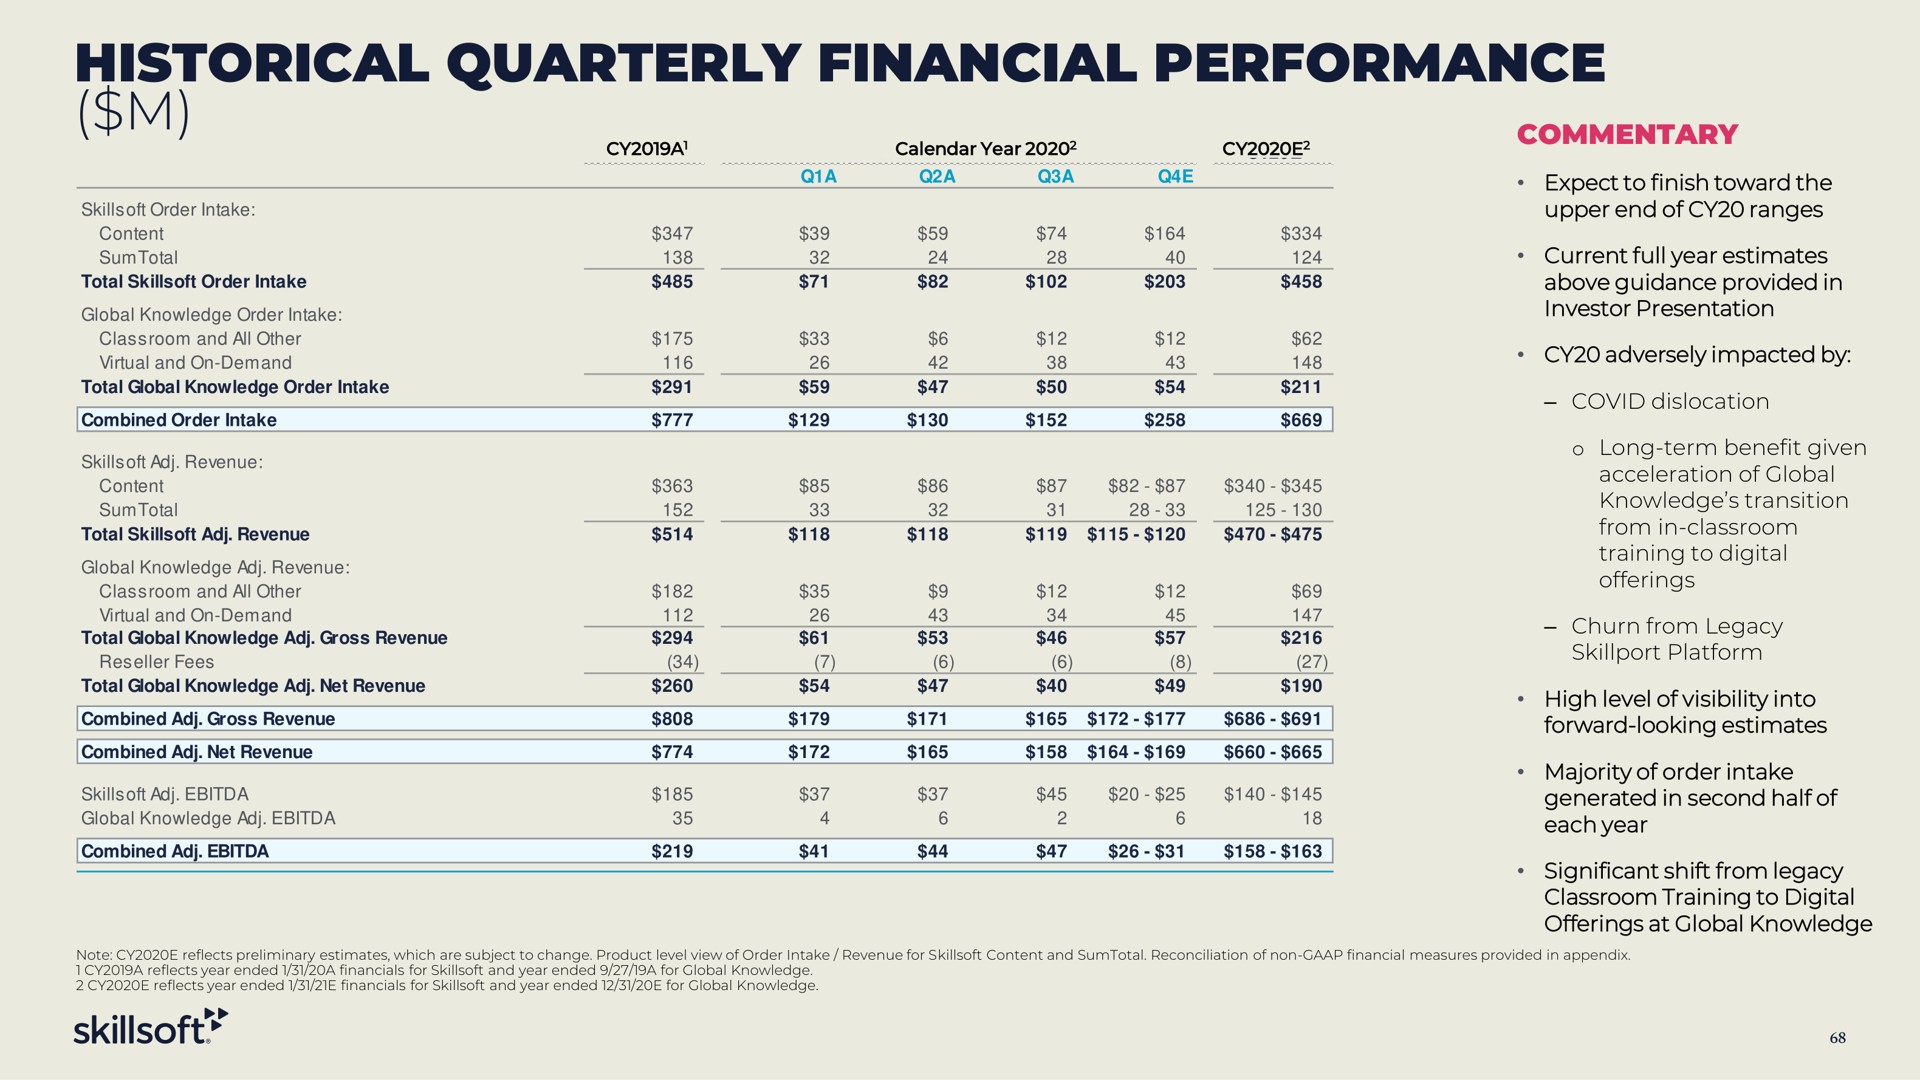 historical quarterly financial performance calendar year comet ary | Skillsoft